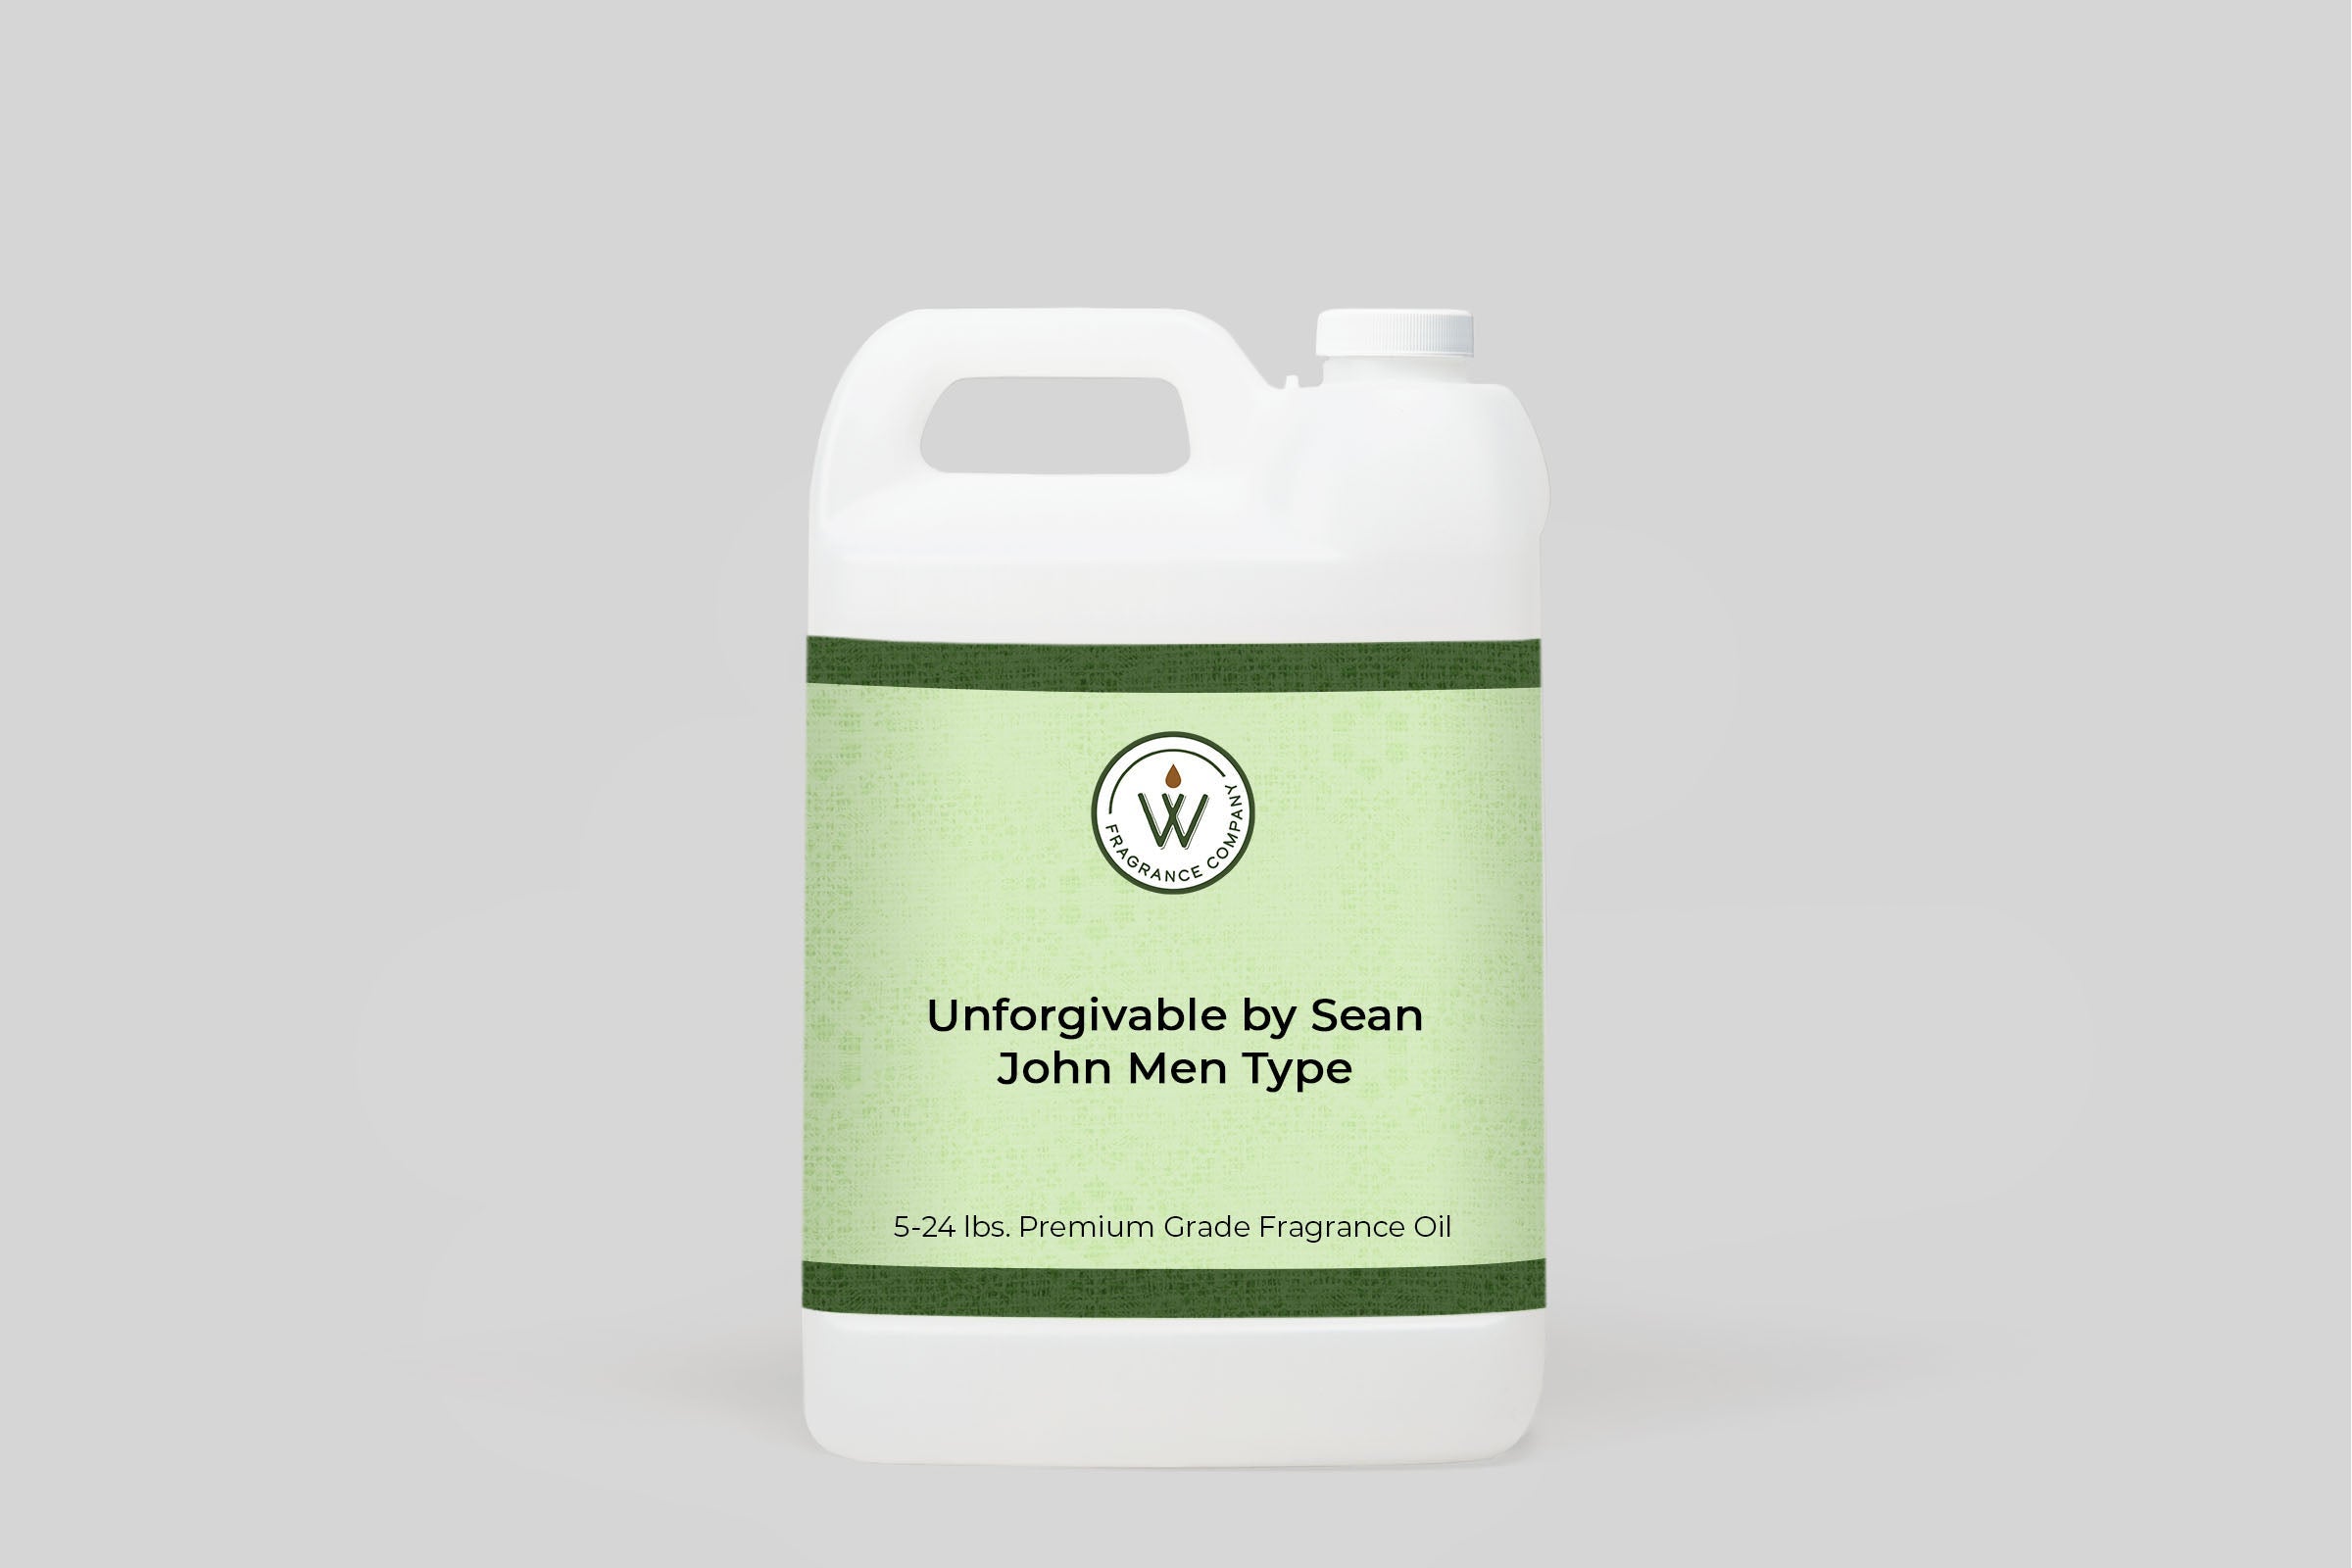 Unforgivable by Sean John Men Type Fragrance Oil